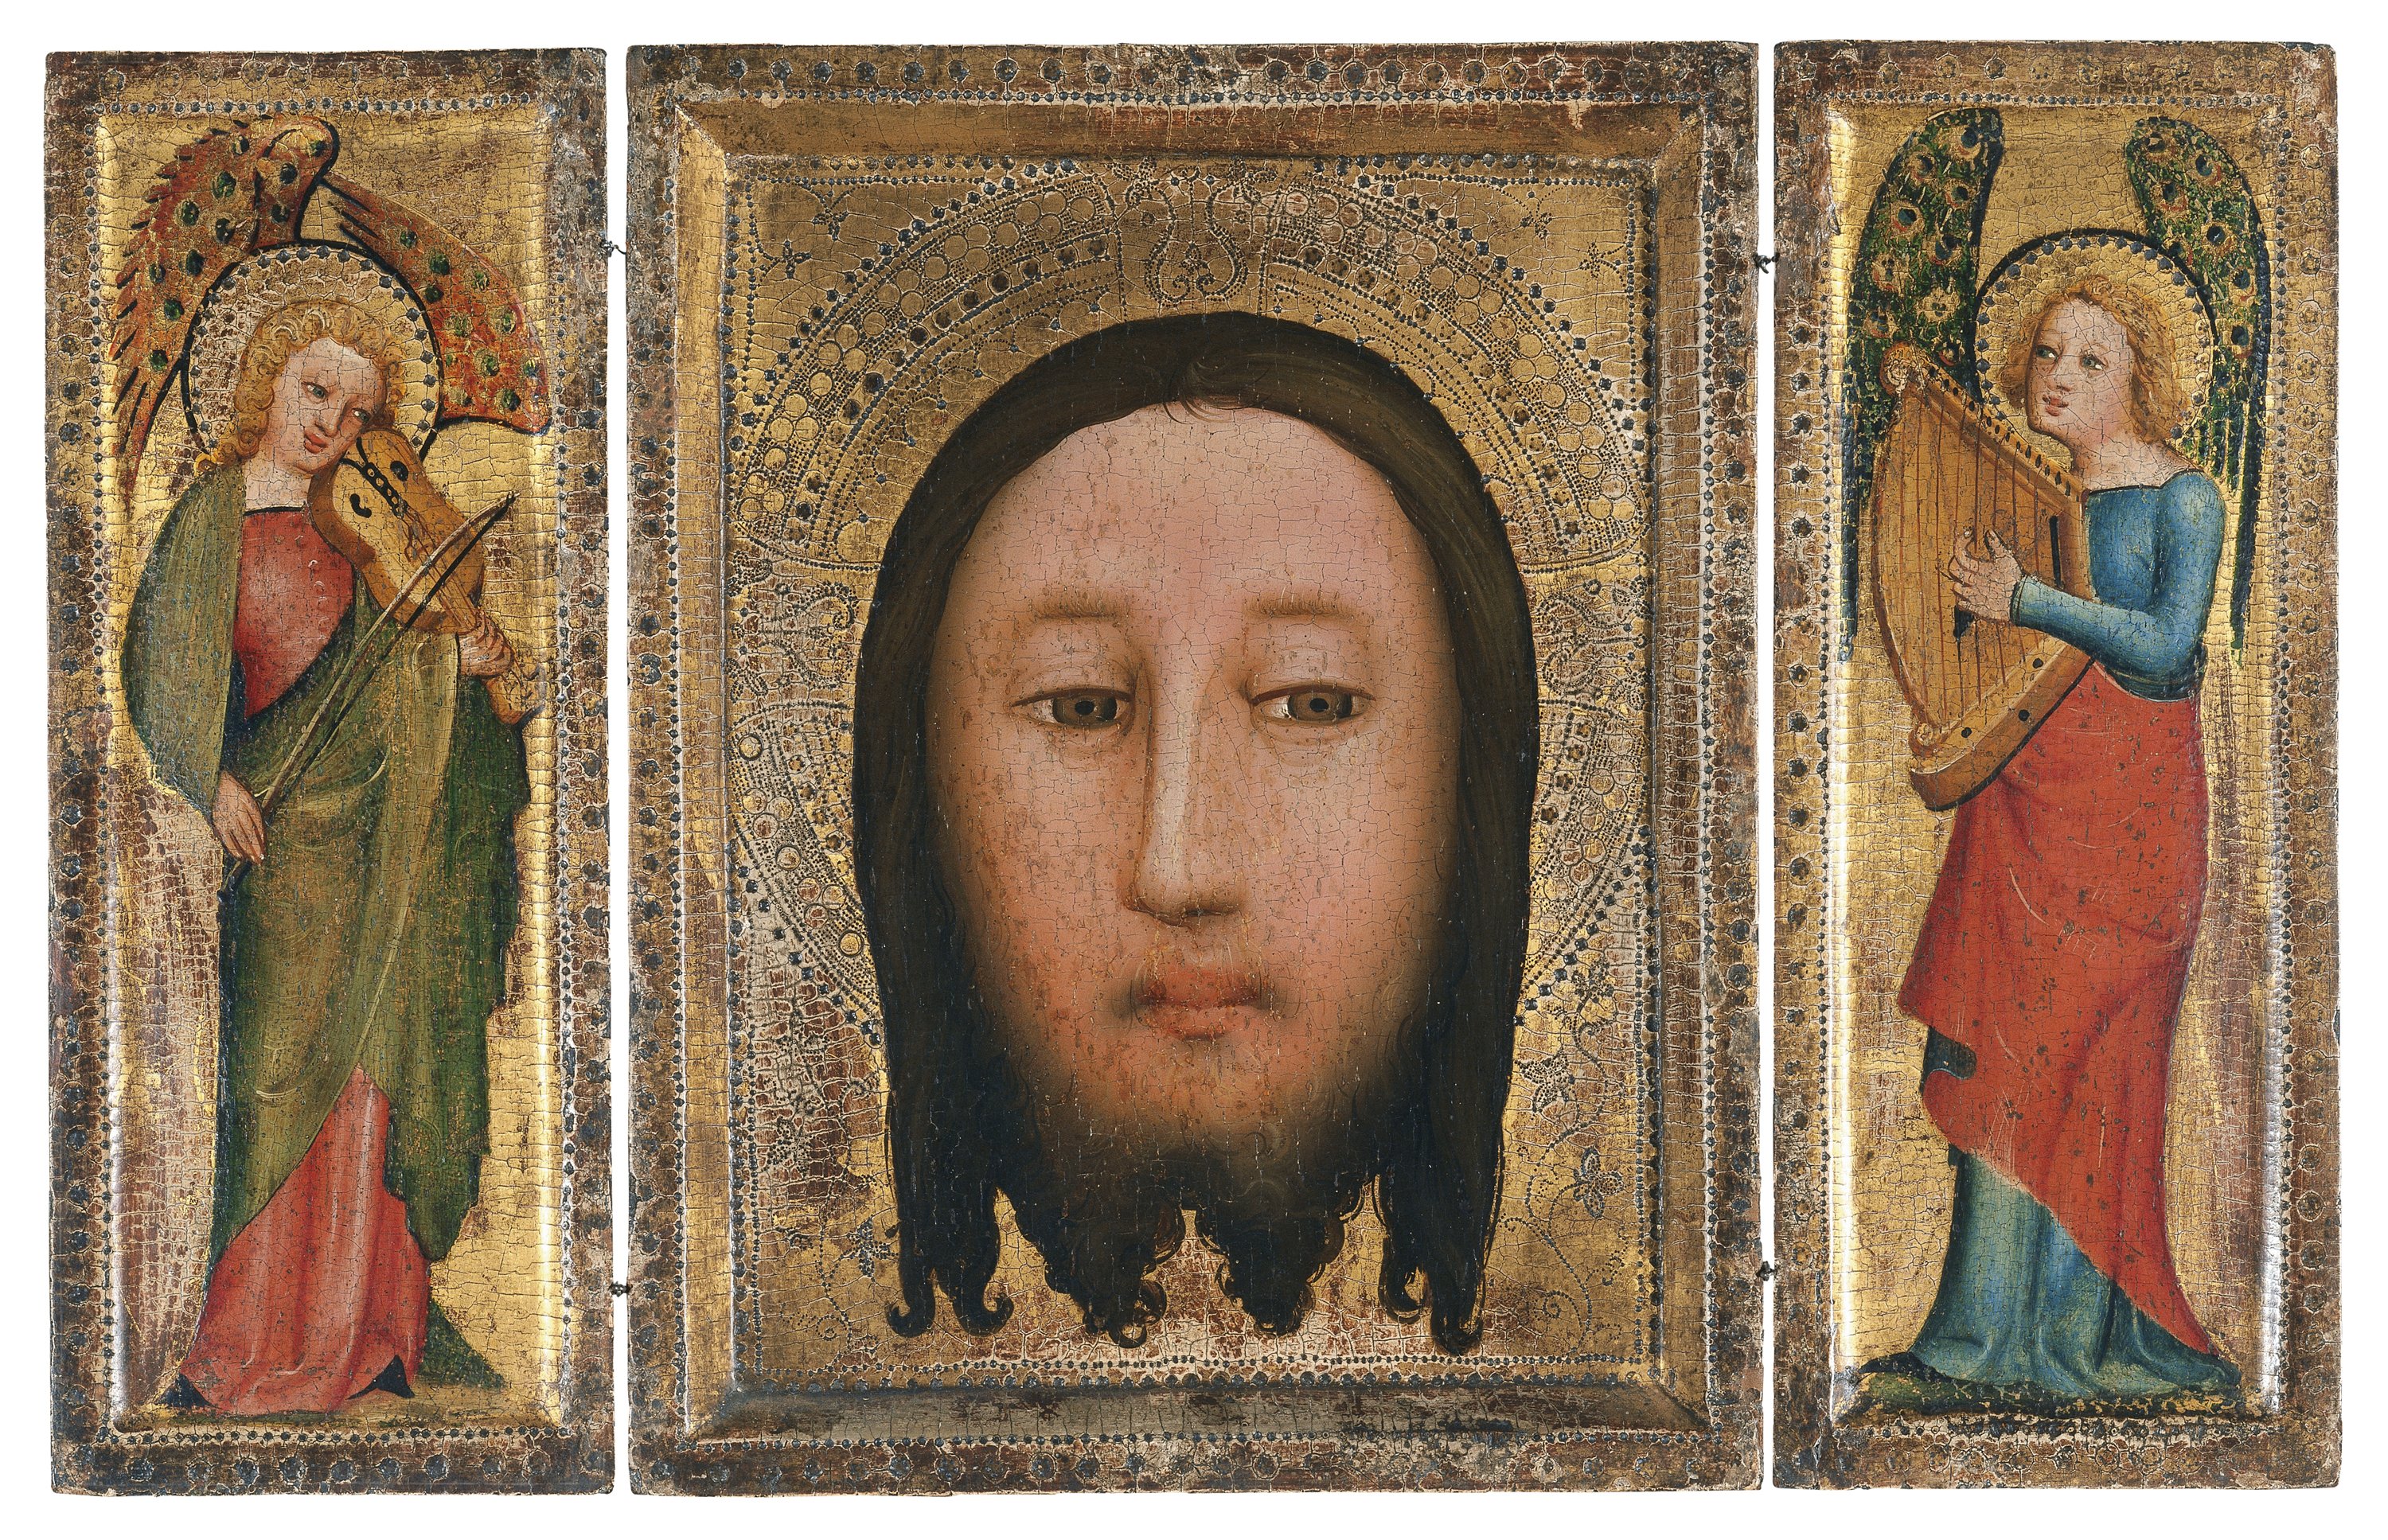 Triptych of The Holy Face: The Holy Visage of Christ (central panel). Tríptico de la Santa Faz: La Santa Faz (tabla central), c. 1390-1400